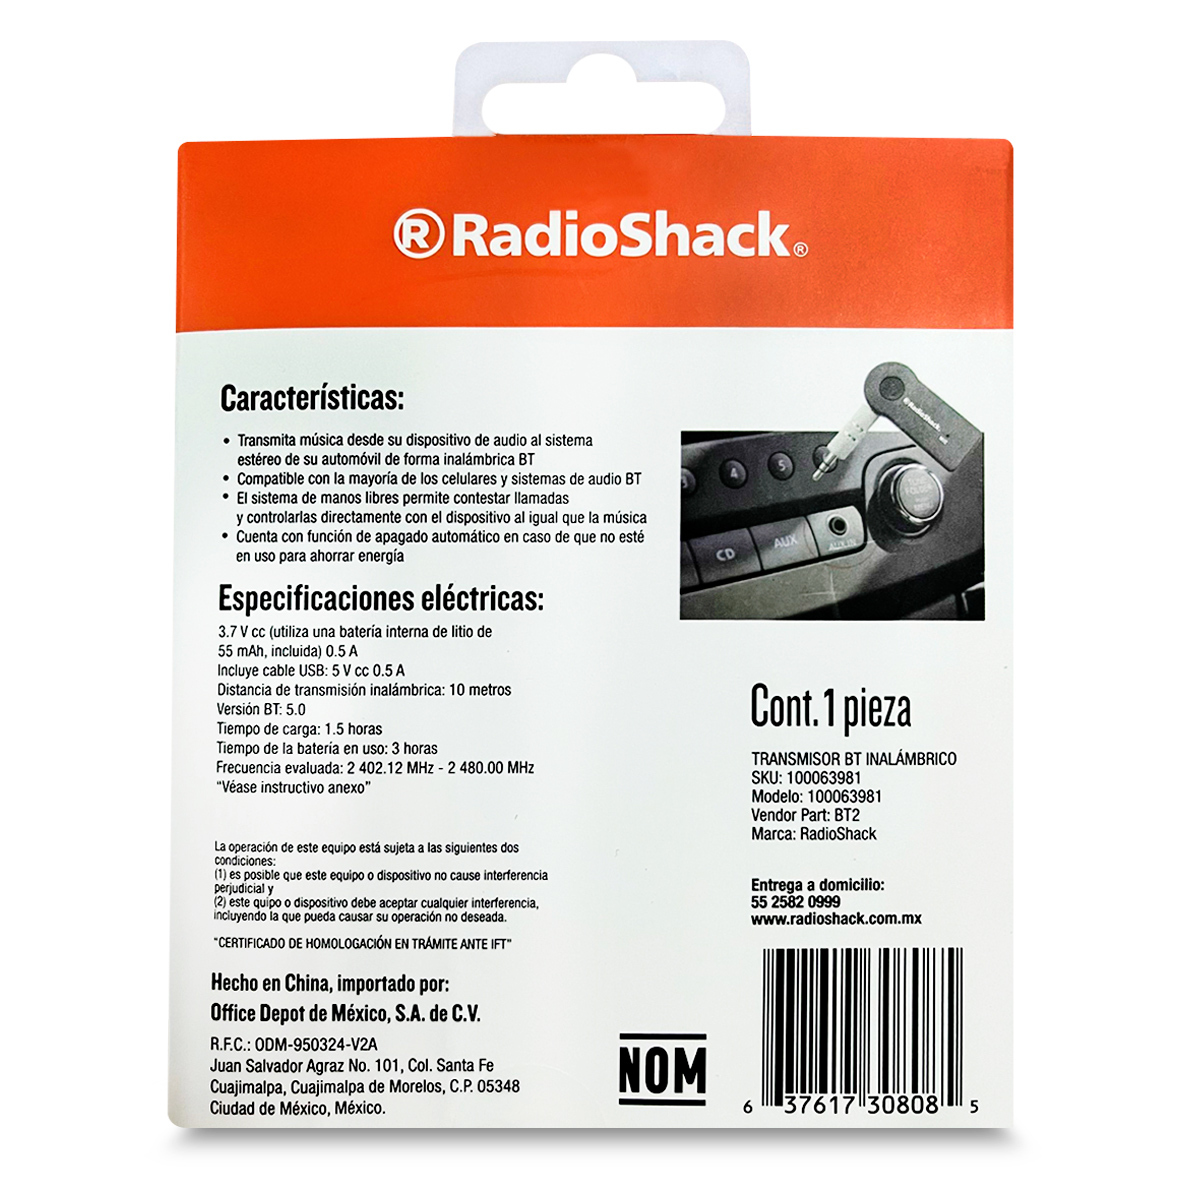 Transmisor bluetooth RadioShack 1202251 FM Negro y anaranjado